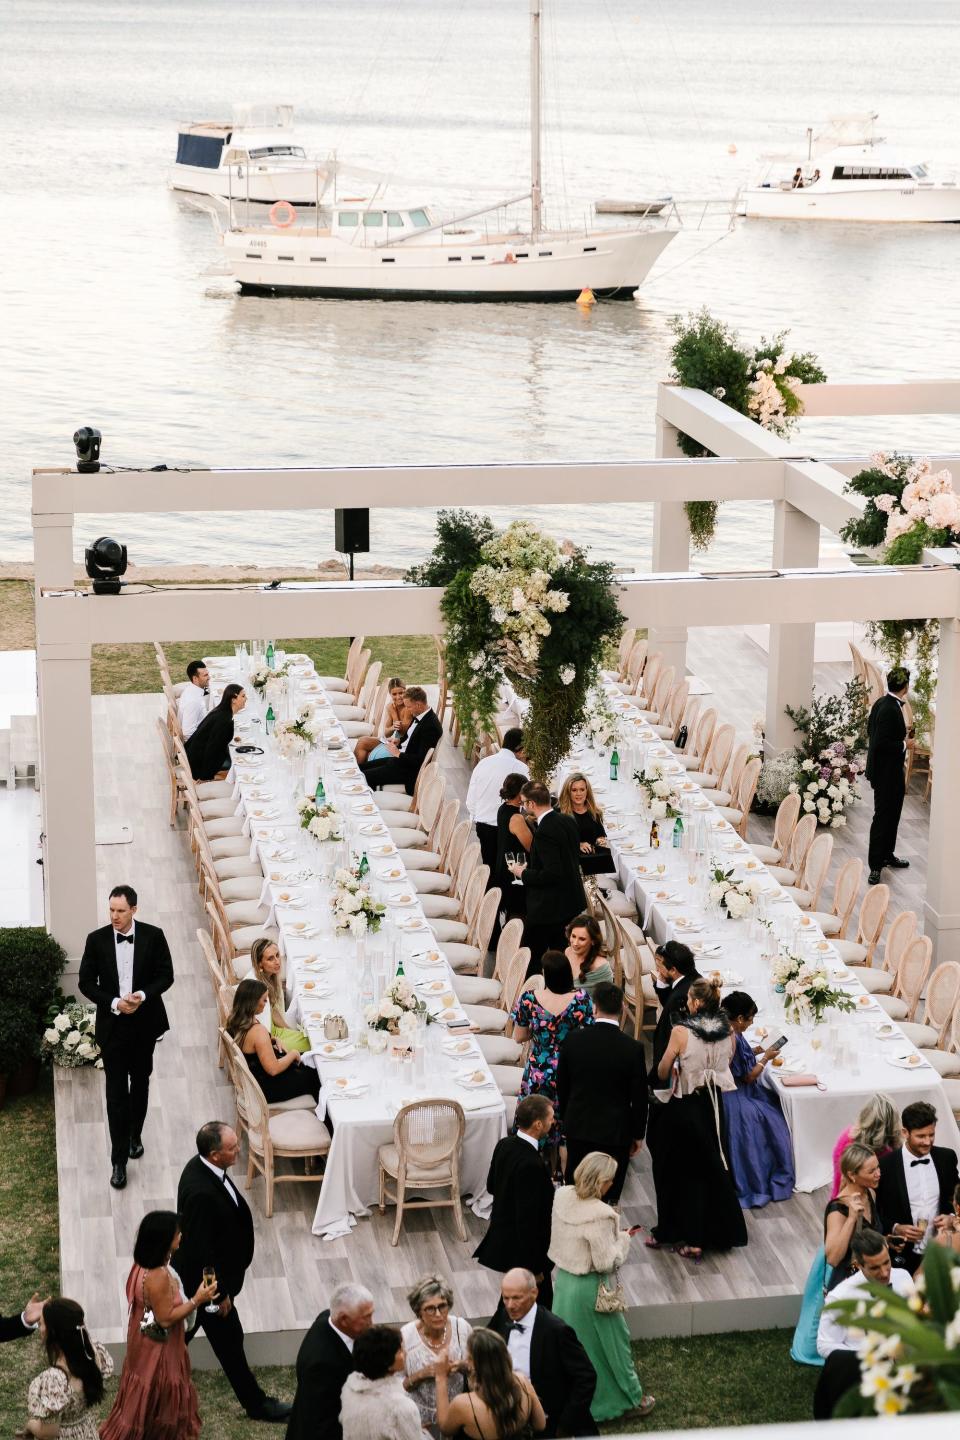 An outdoor wedding reception overlooking the water.